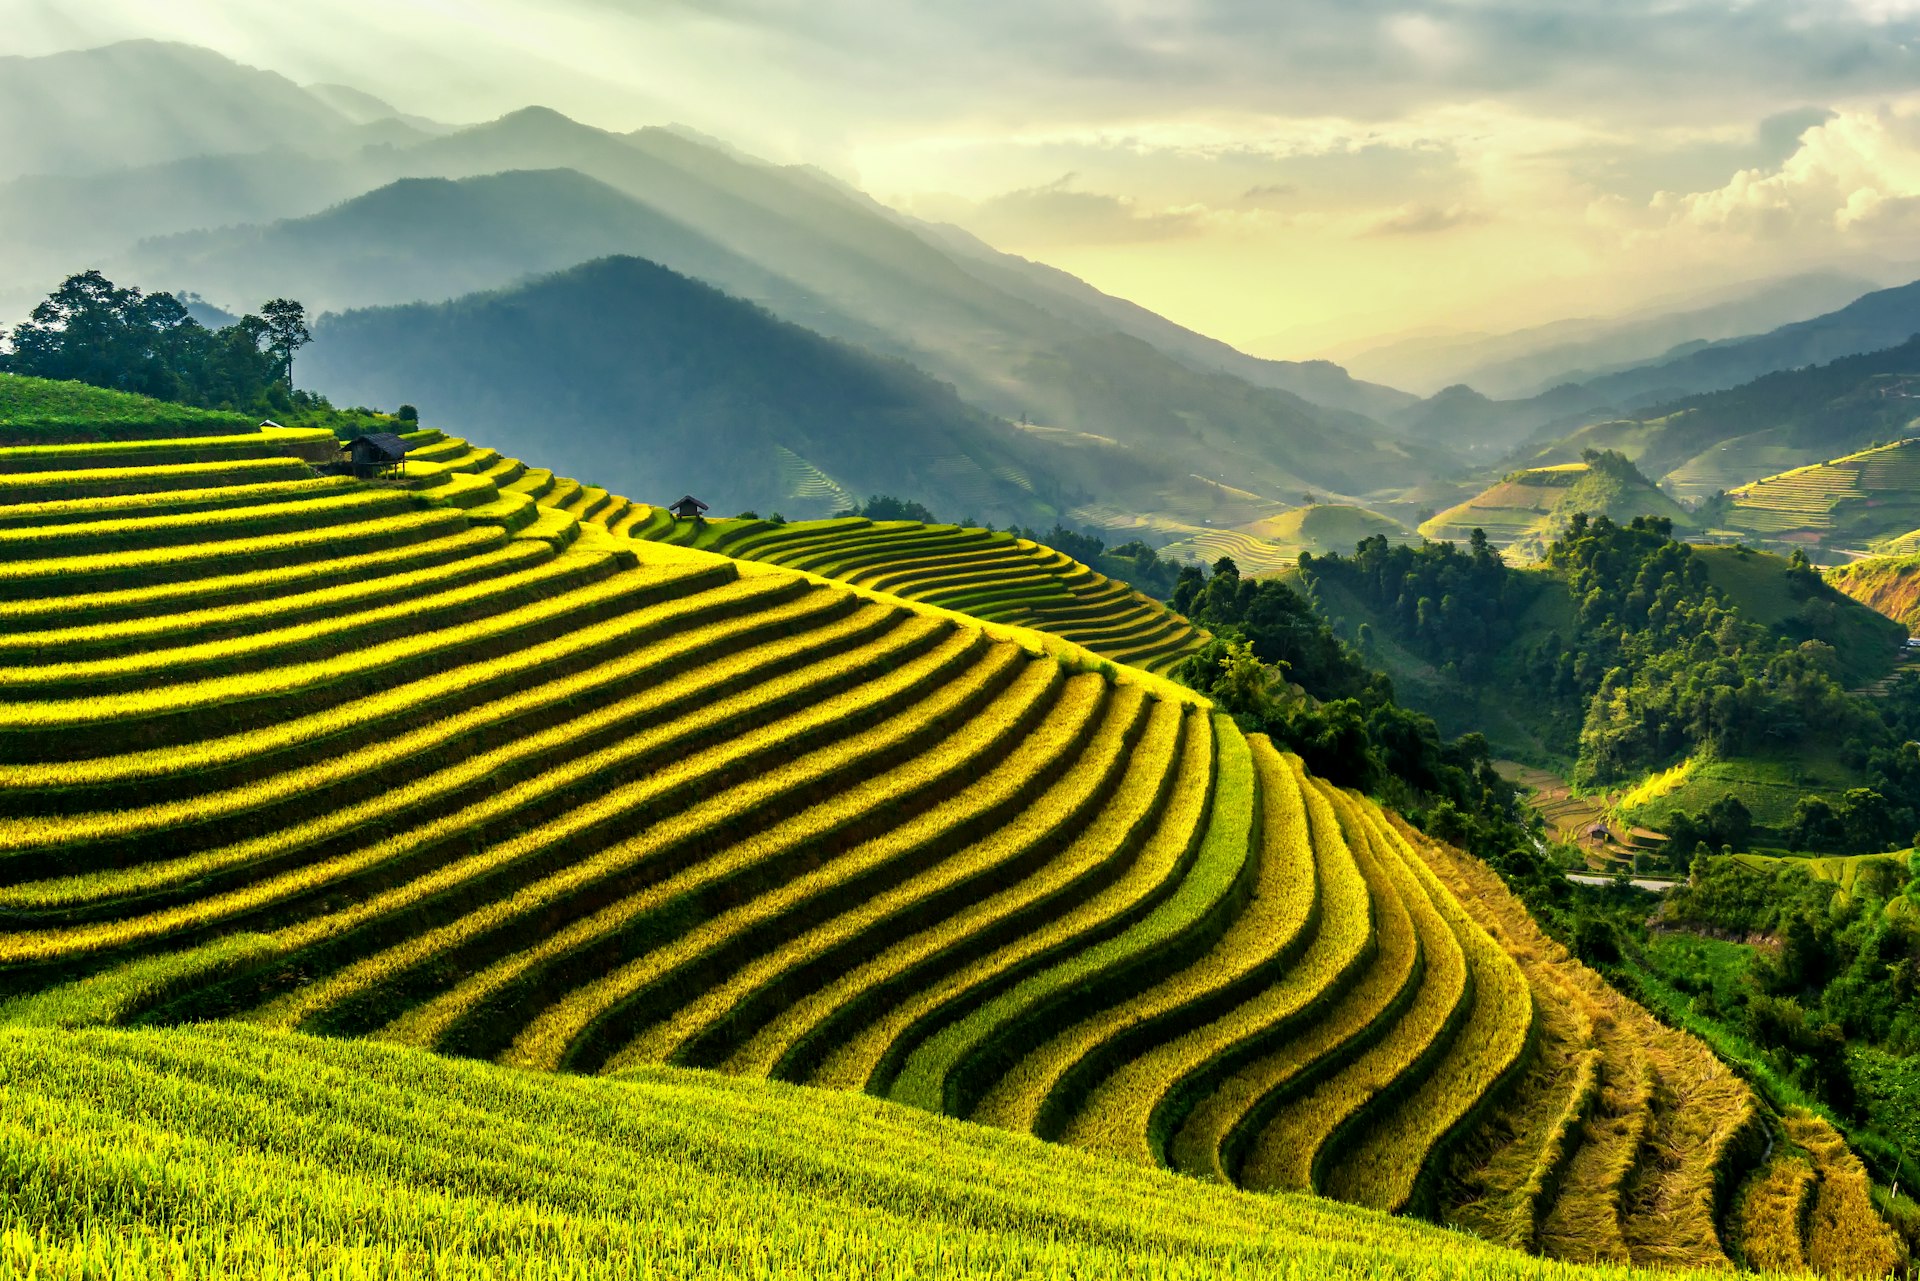 Rice terraces at Mu Cang Chai in Vietnam